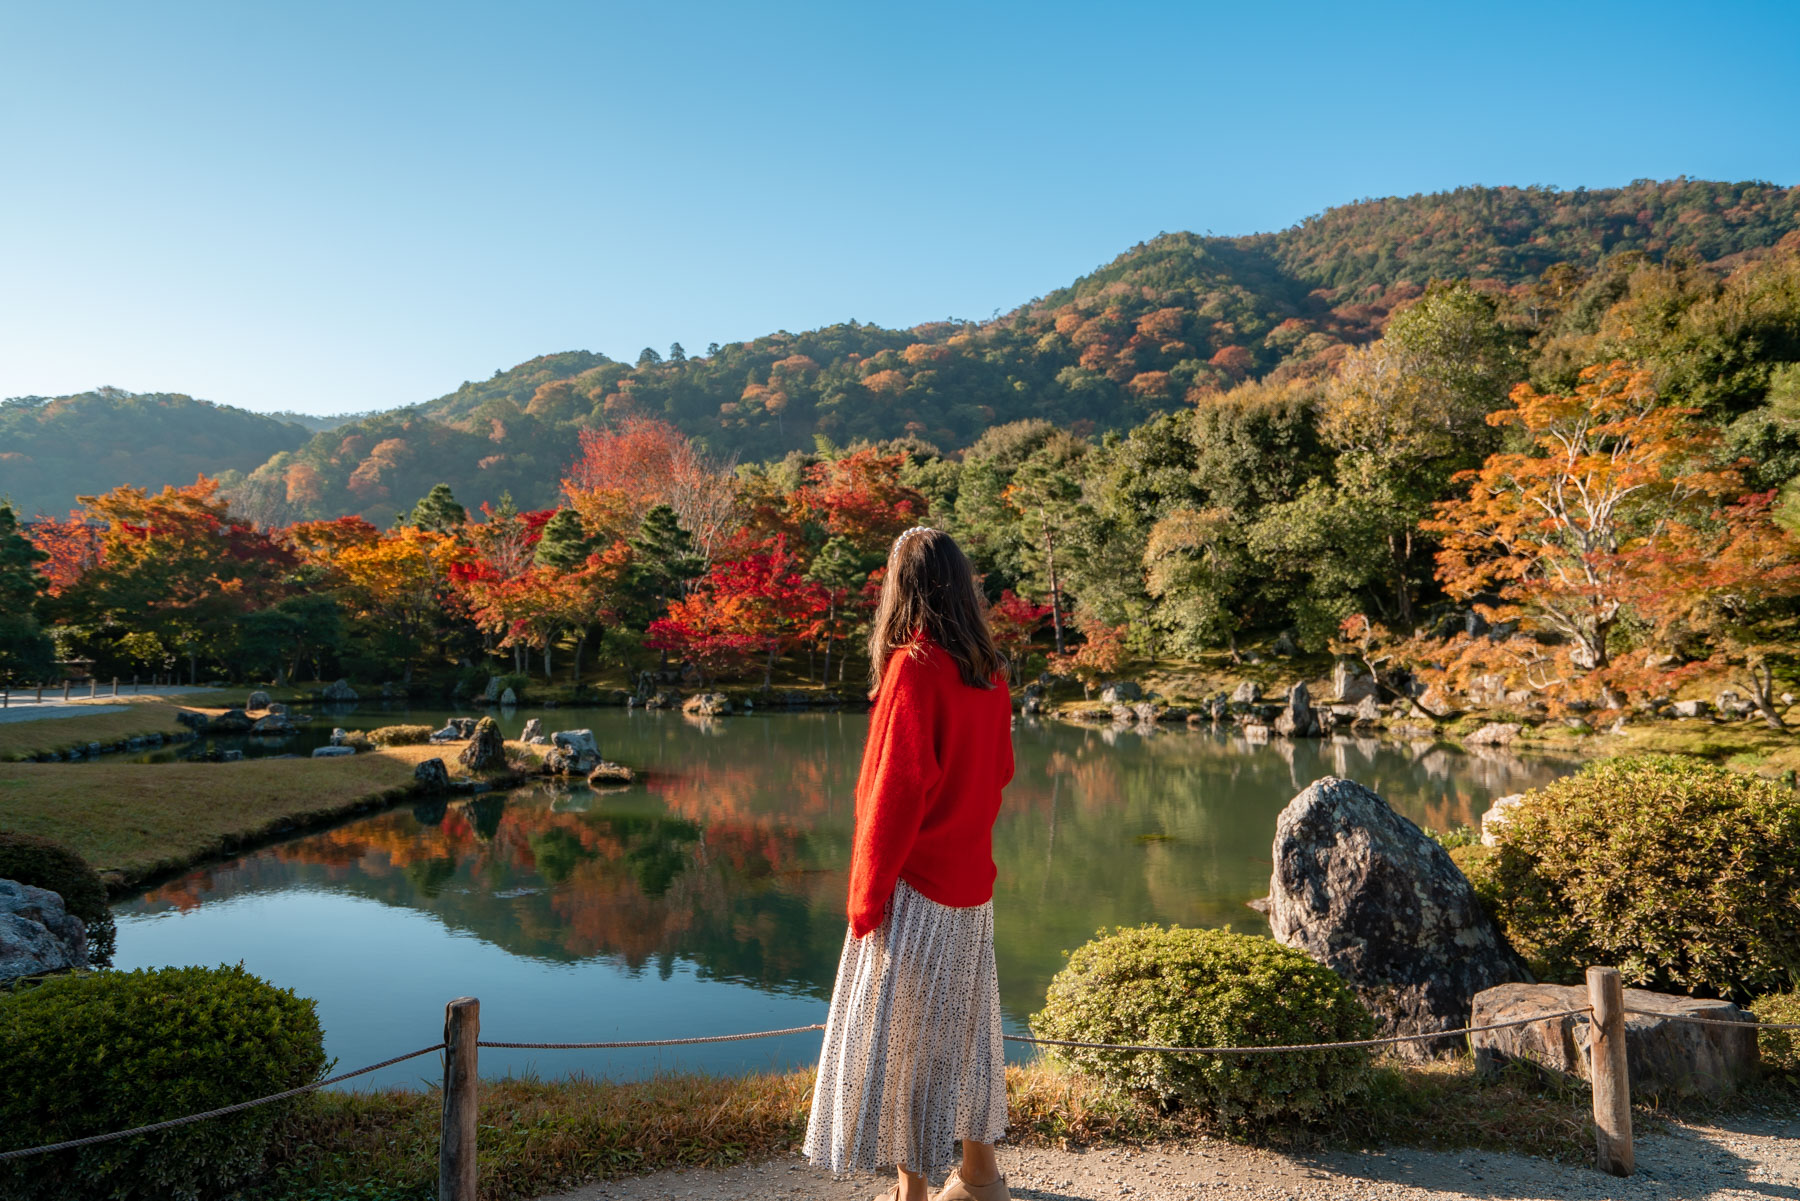 Tenryuji Temple and gardens in fall in Kyoto